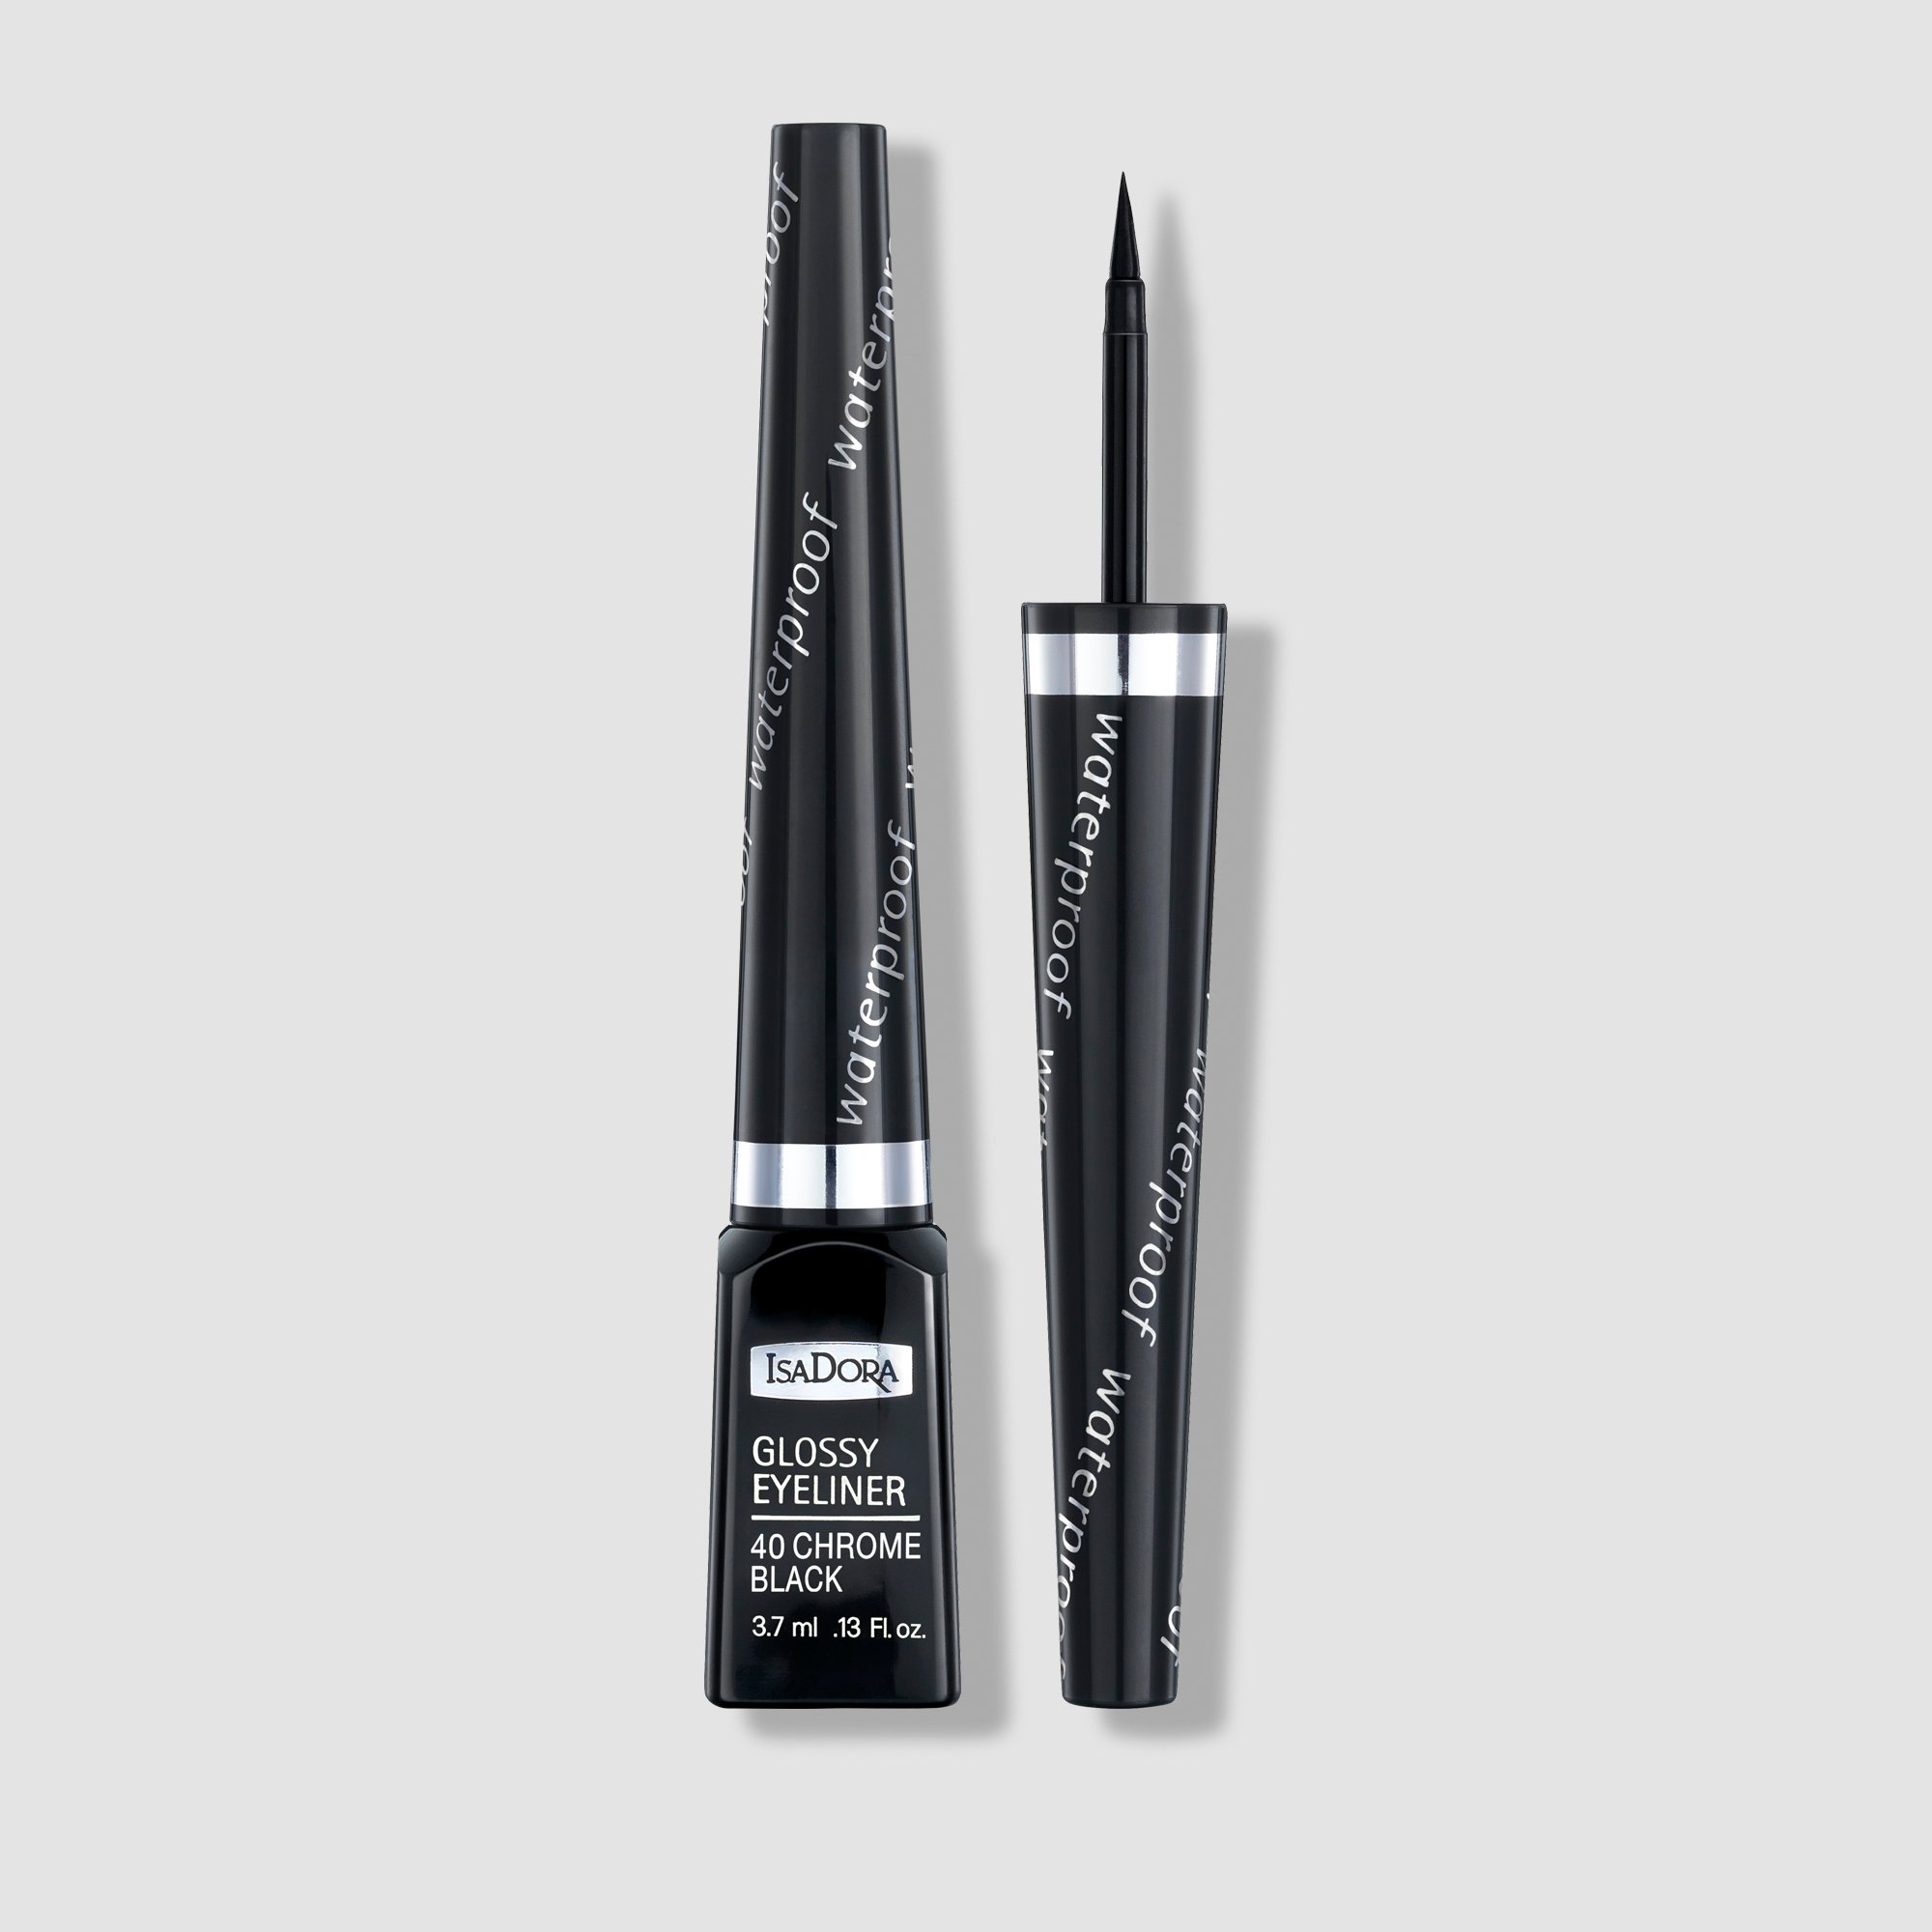 Glossy Eyeliner 40 Chrome Black | Products | EN